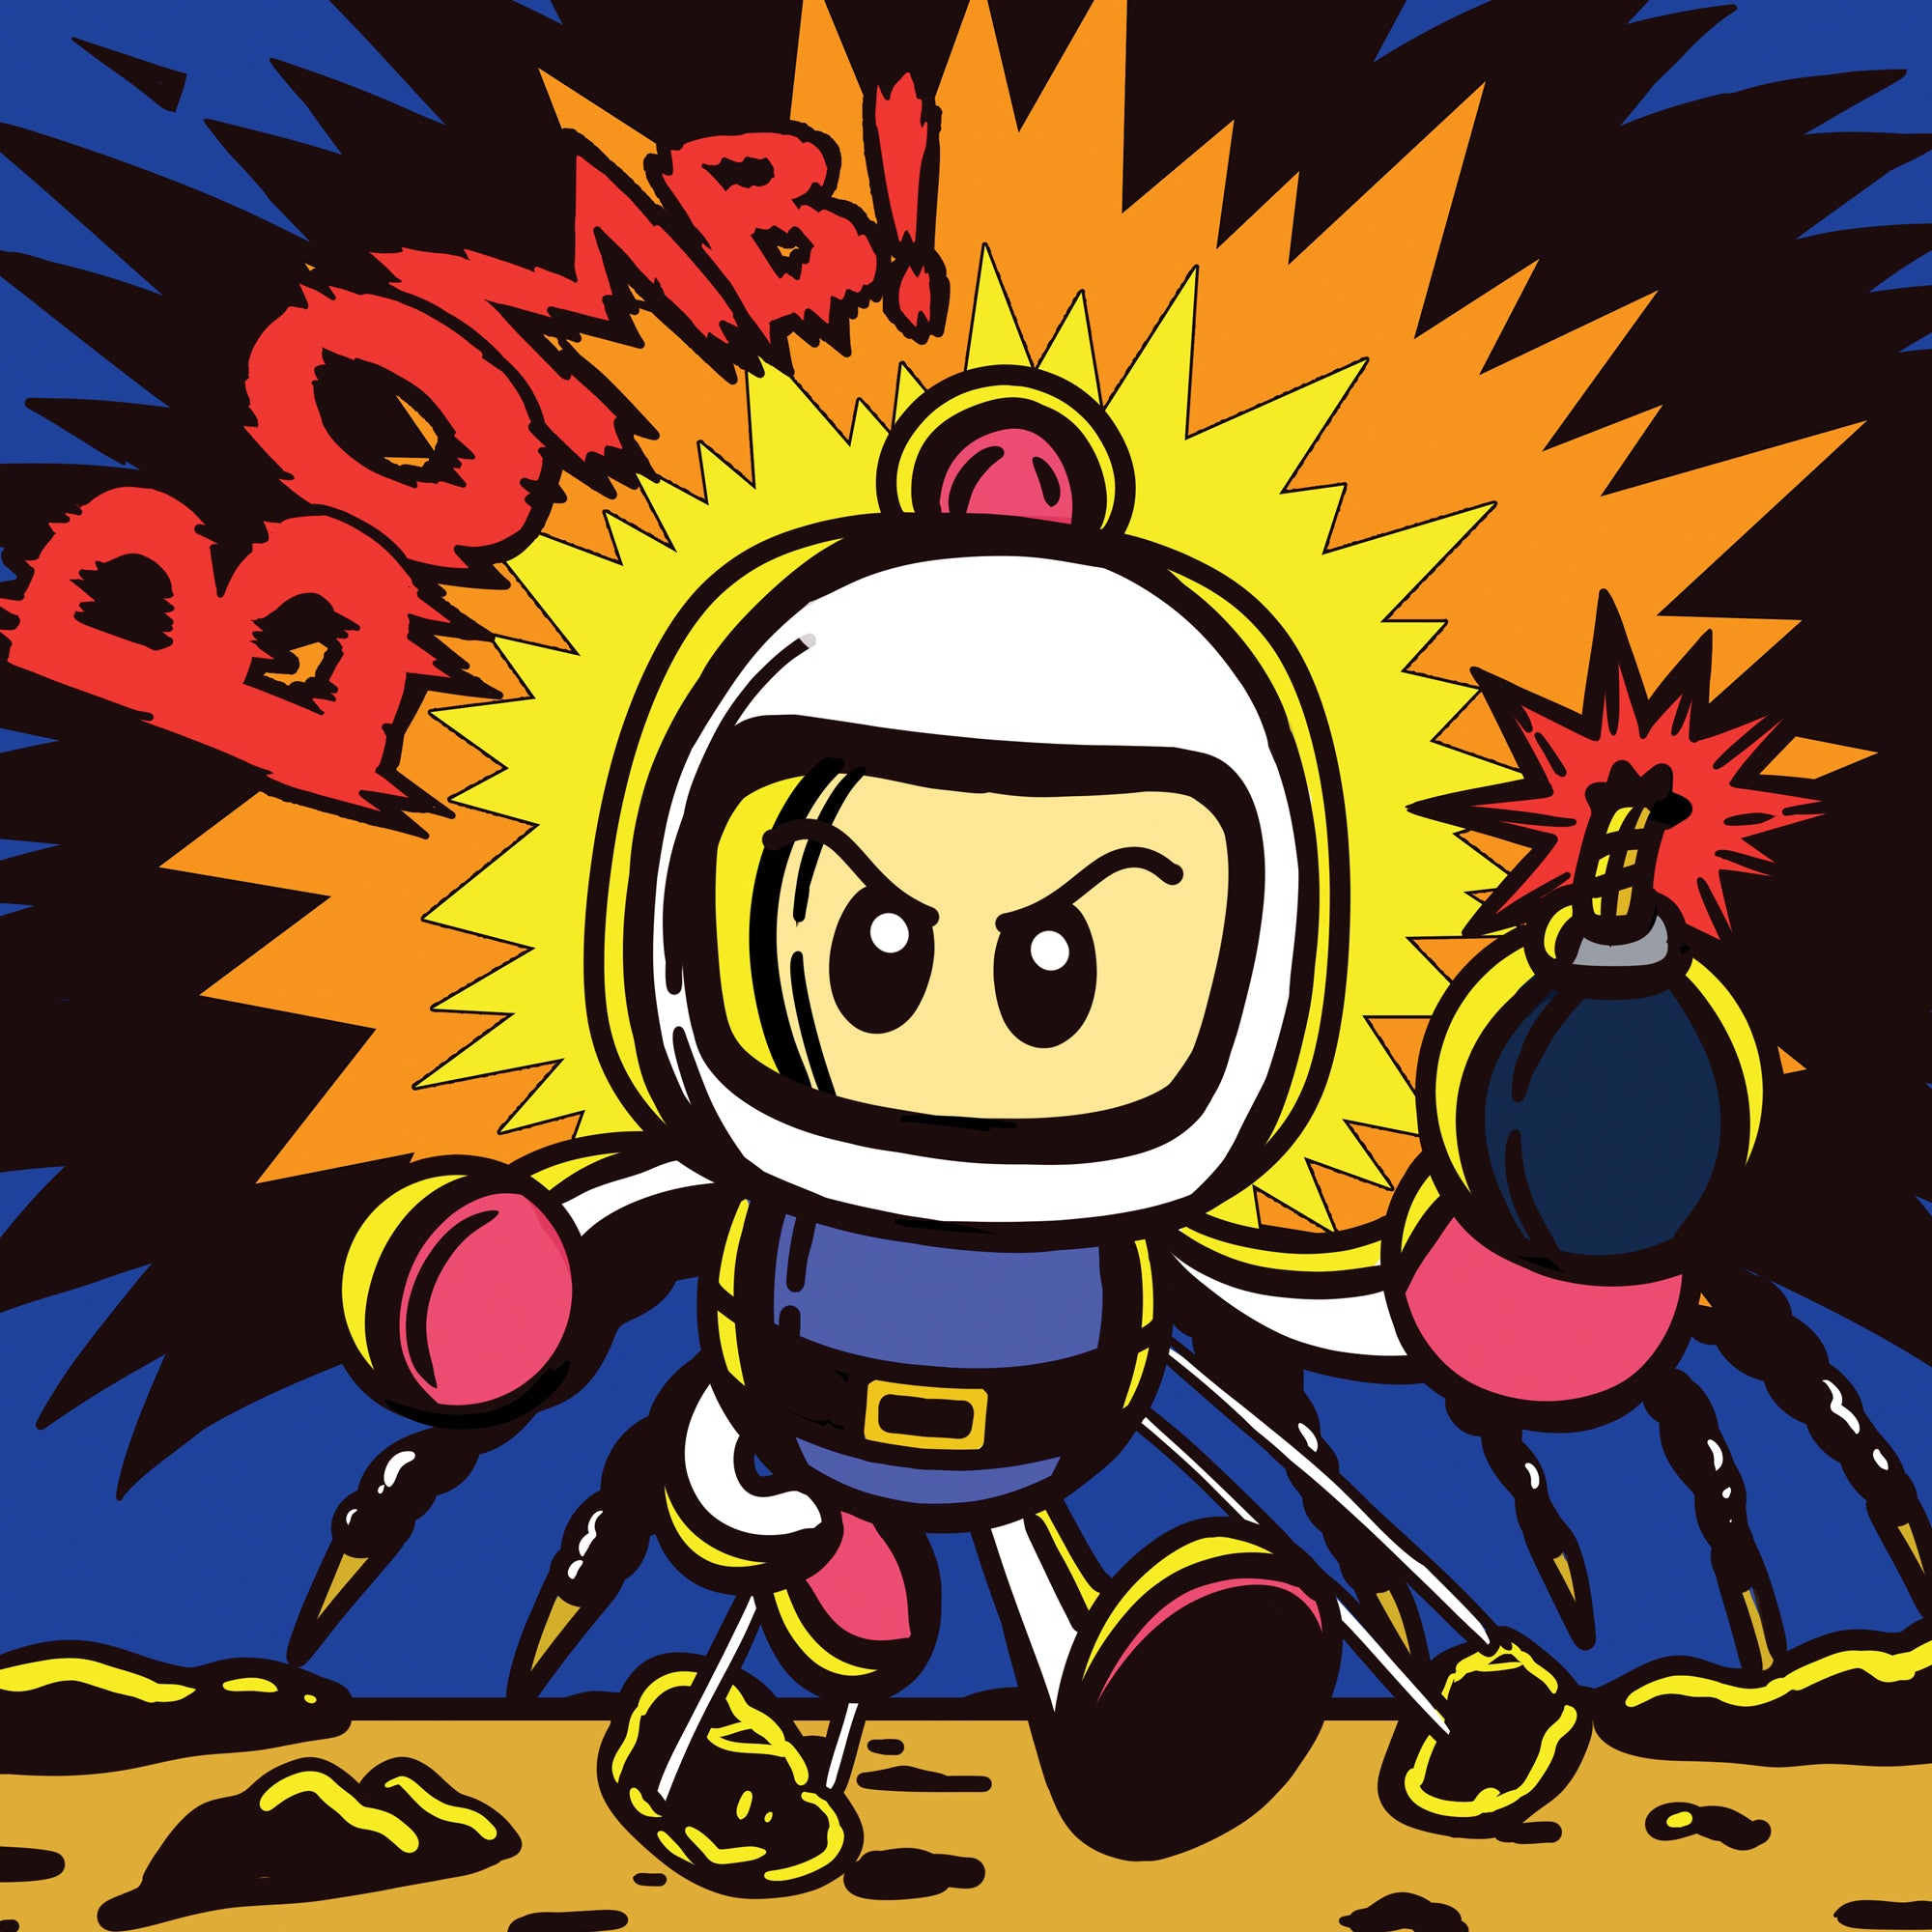 Bomberman 1+2 – Light in the Attic